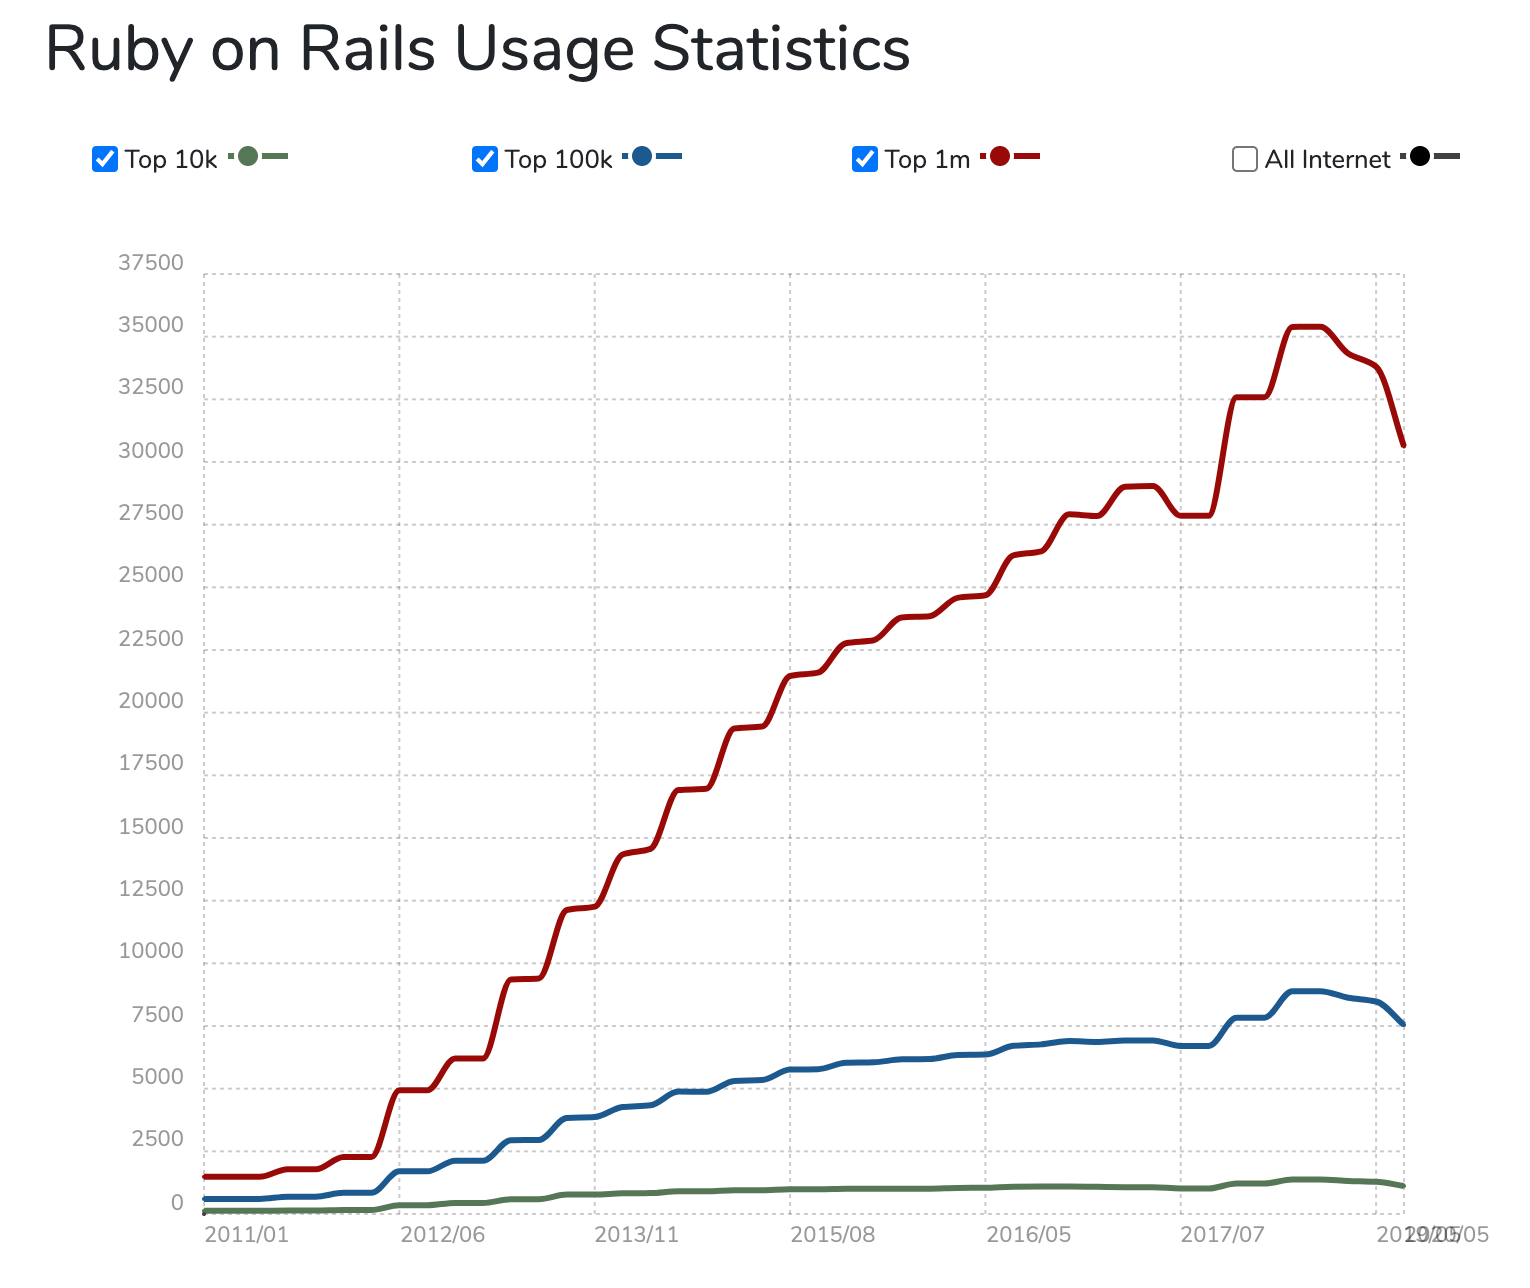 Ruby on Rails usage statistics